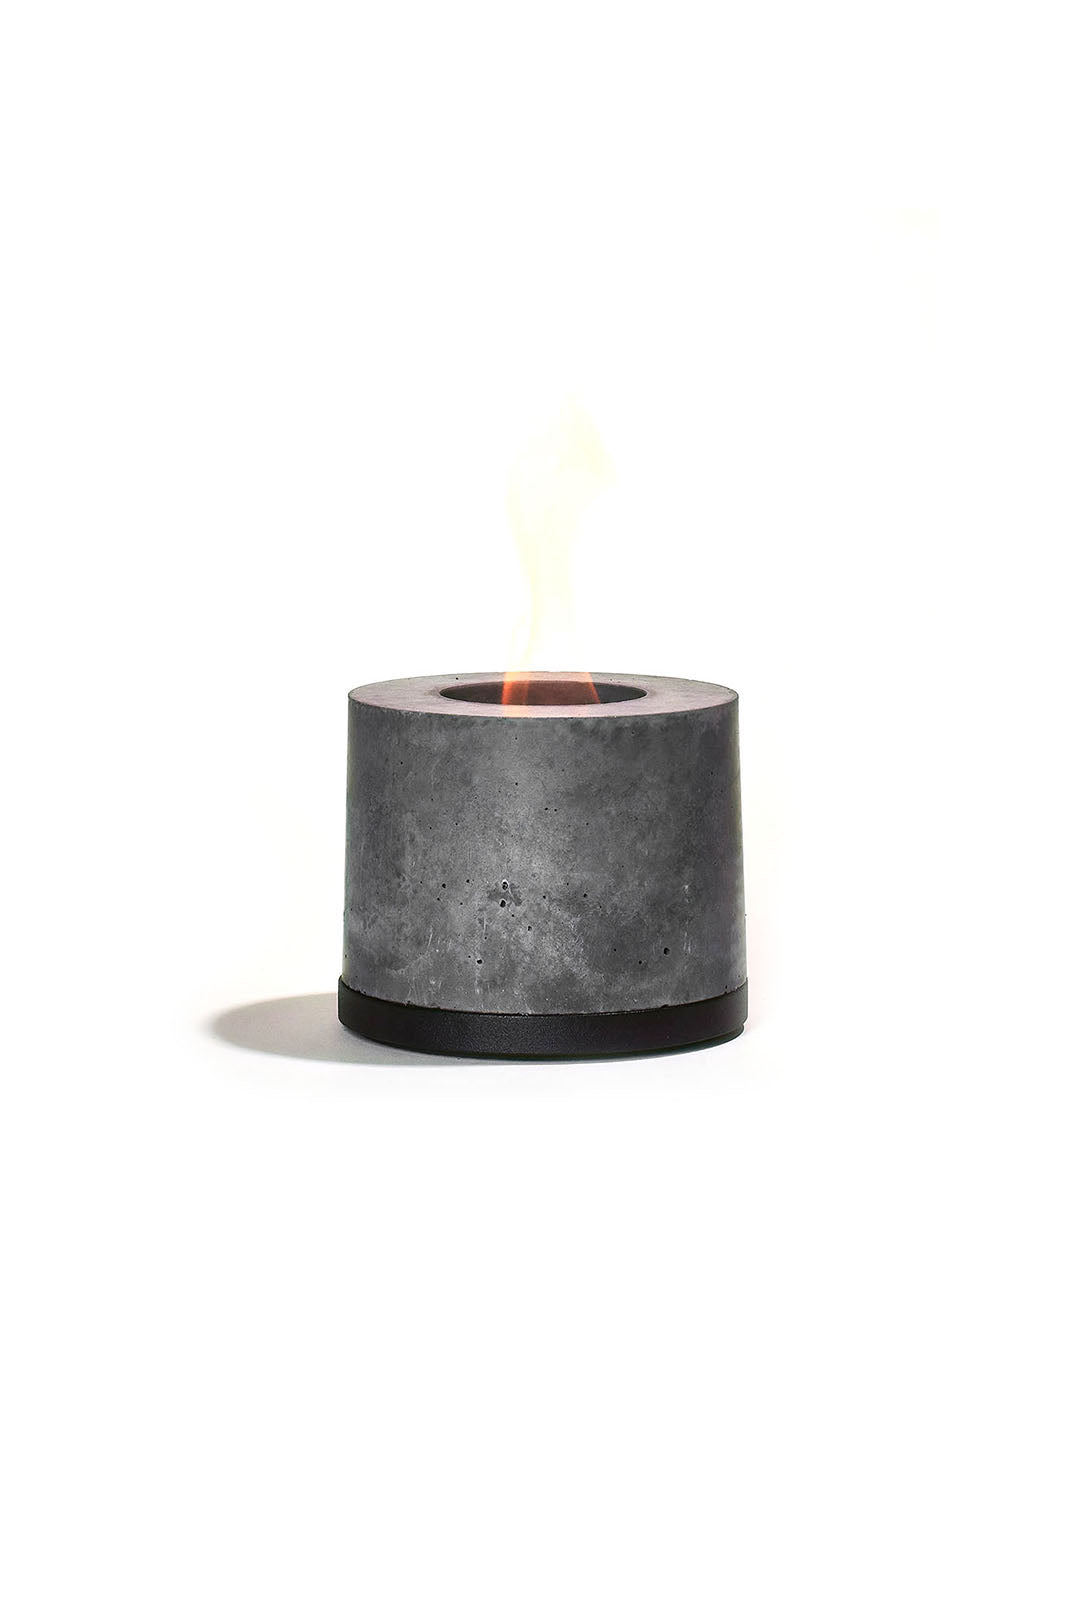 Personal Concrete Fireplace, Mini - Black Aluminum Base